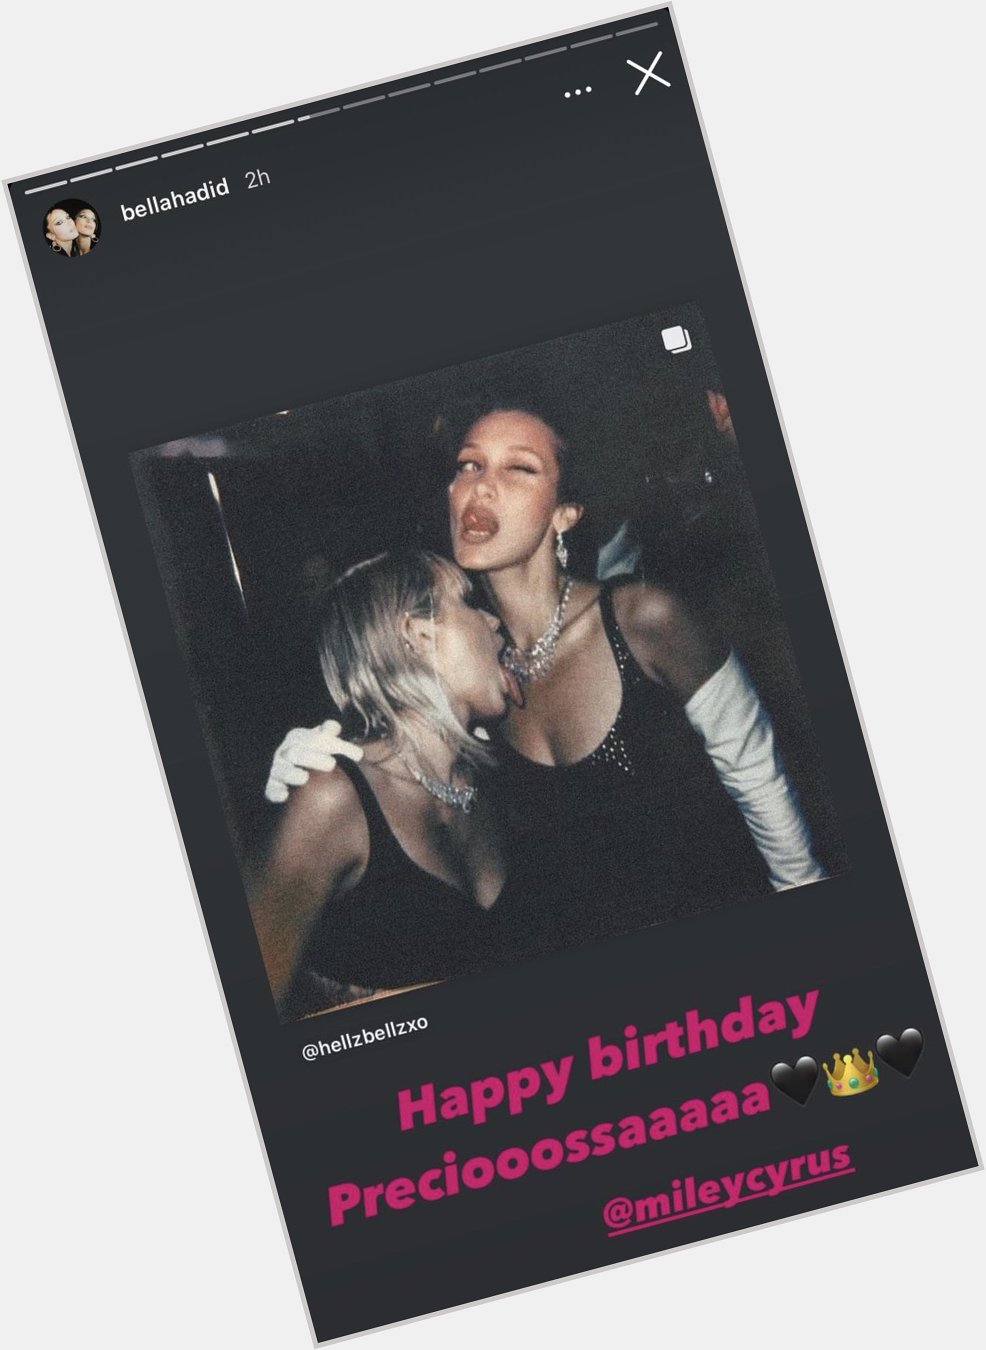 Bella Hadid, Emily Ratajkowski, Demi Moore, and Diplo wishing Miley a happy birthday via Instagram Stories!  